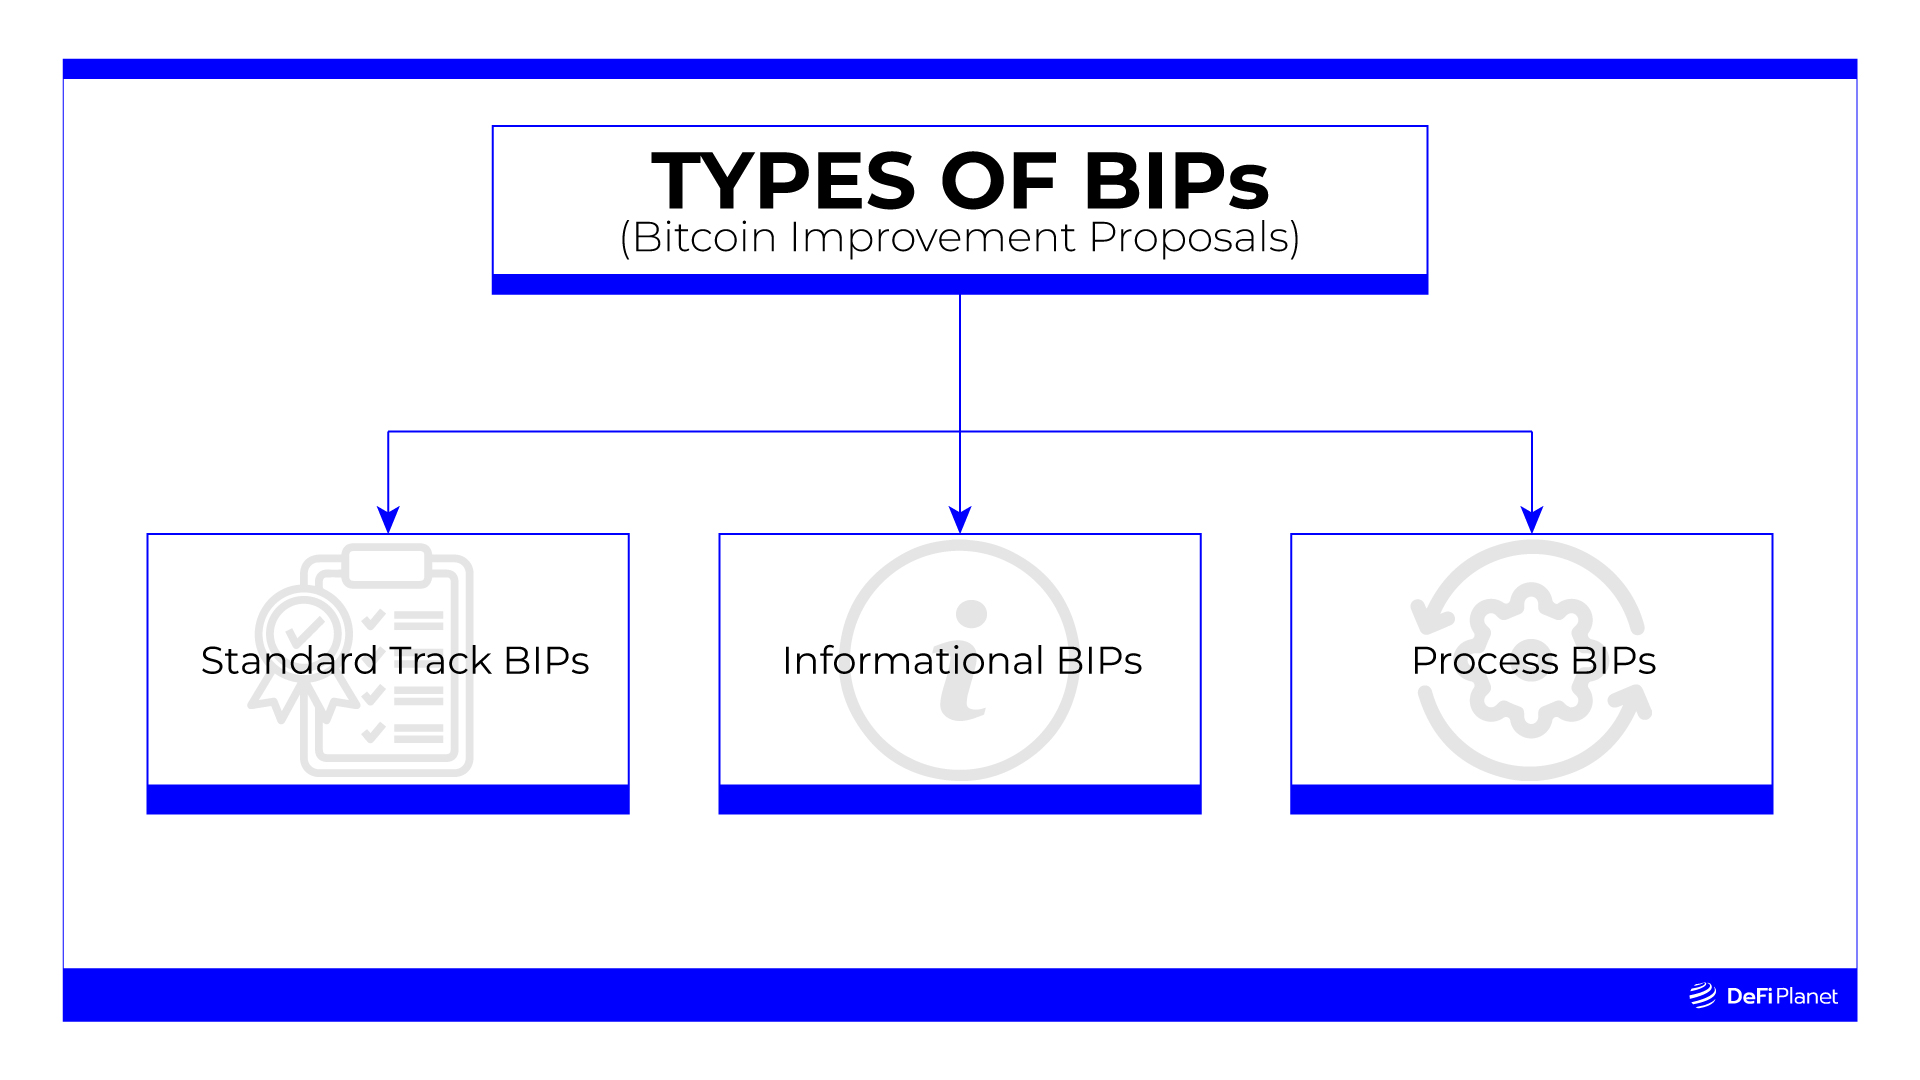 Types-of-BIPs-Custom-Image on DeFi Planet